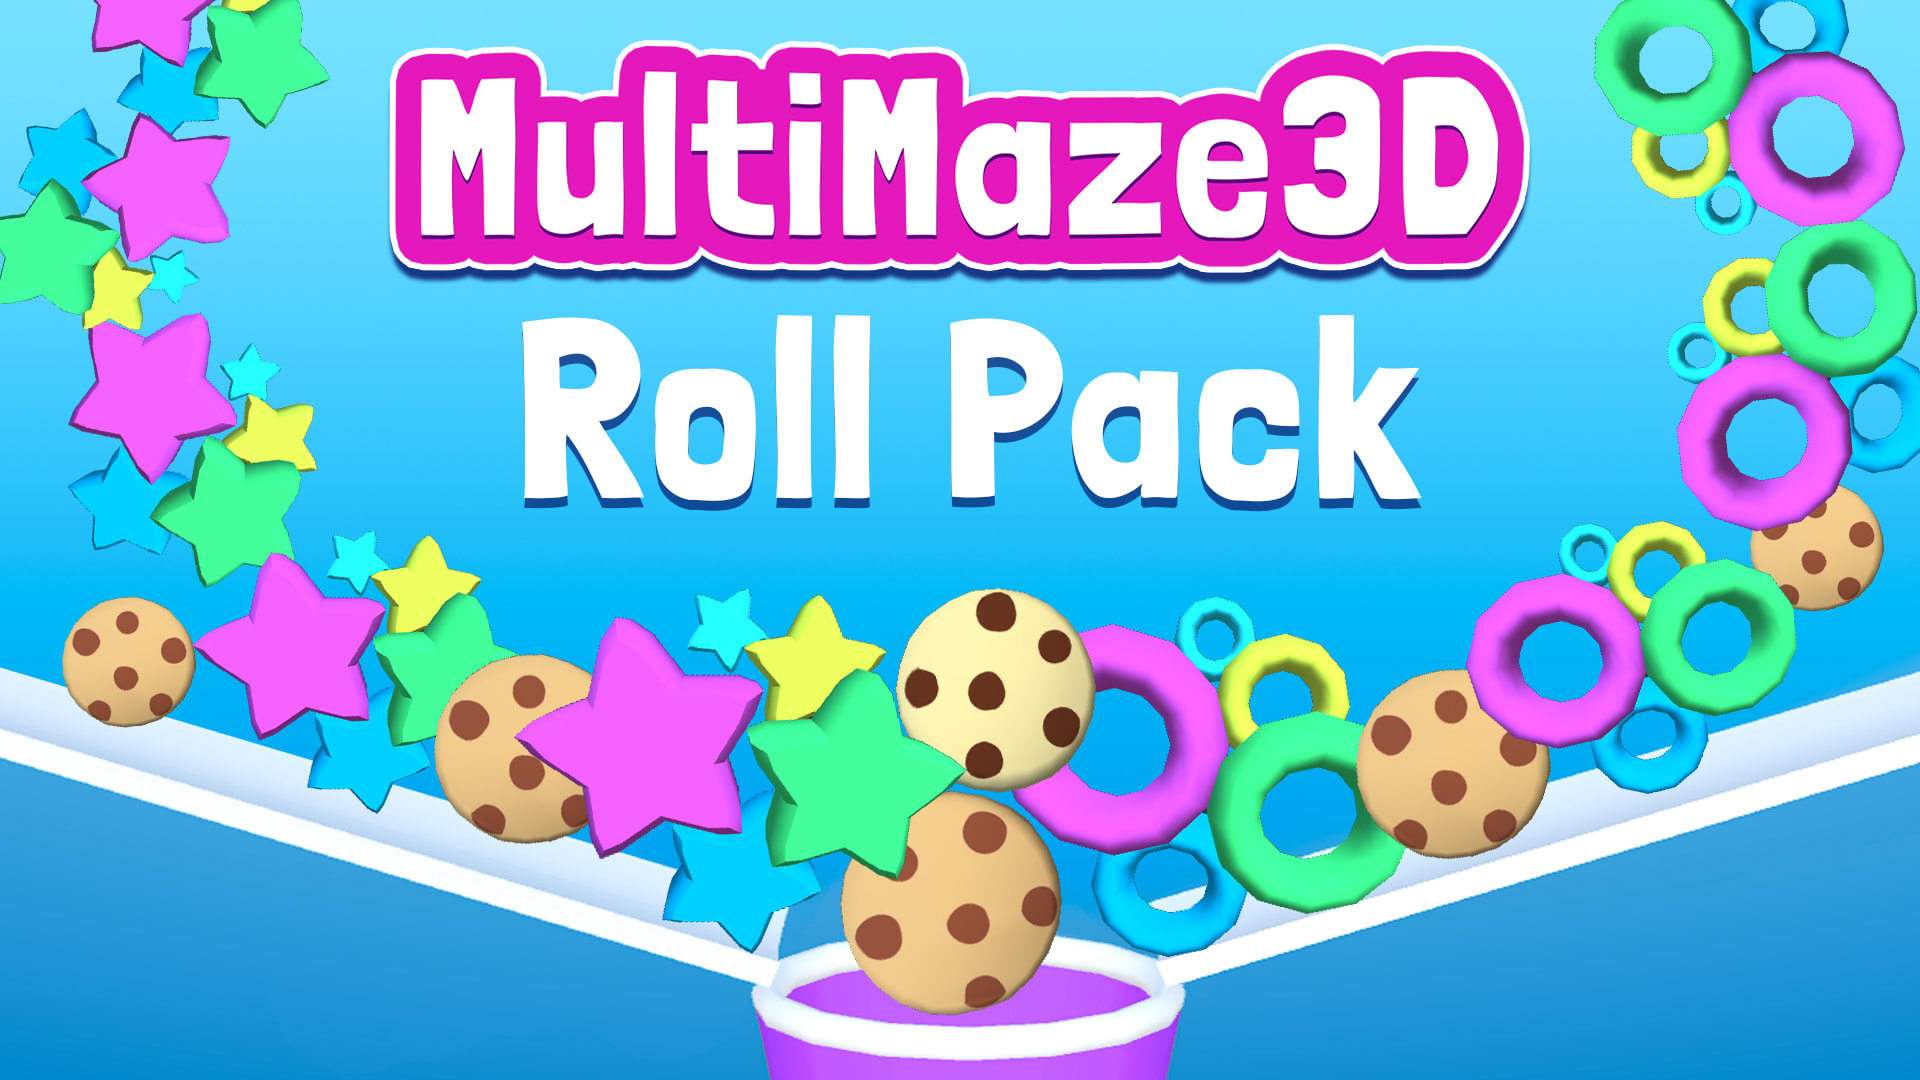 Multi Maze 3D: Roll Pack